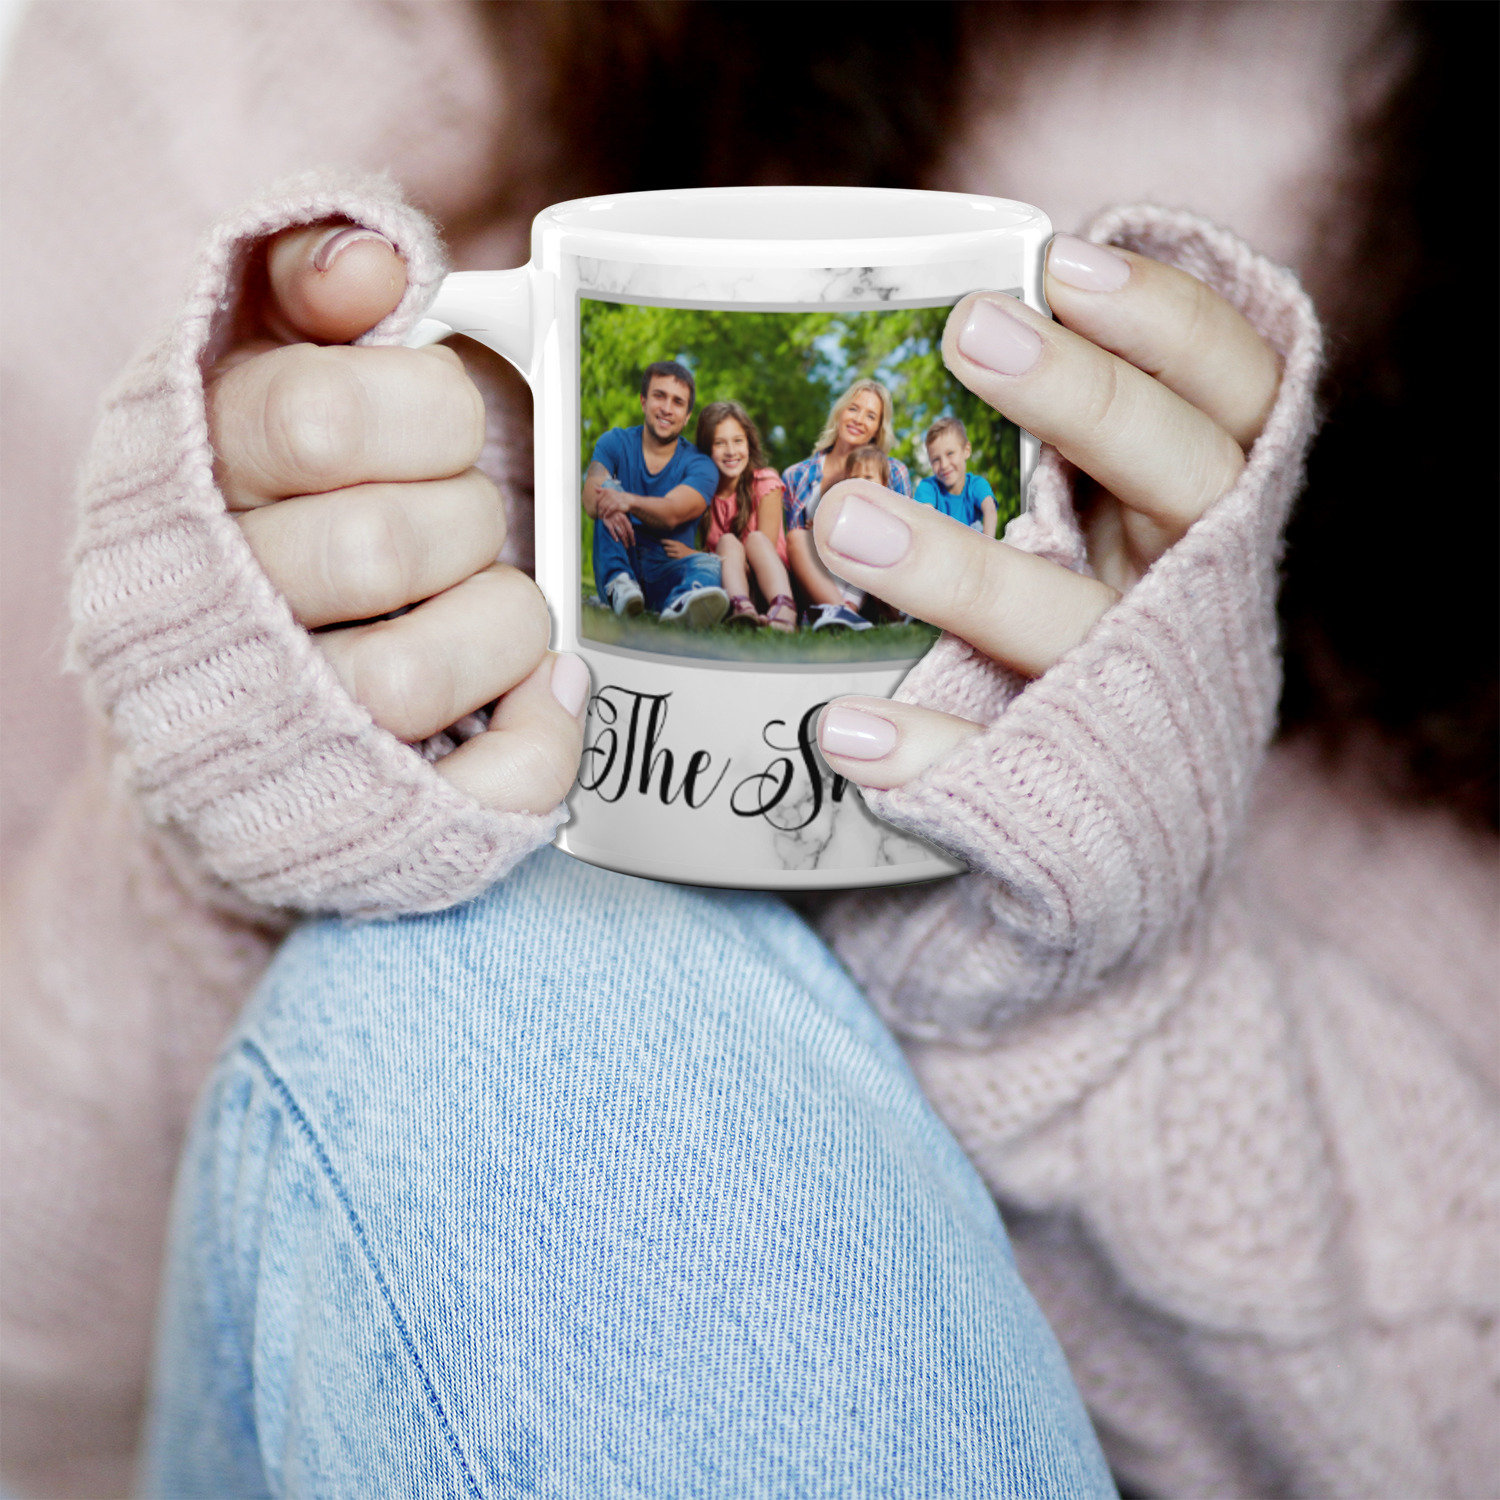 Family Photo Personalized Coffee Mugs